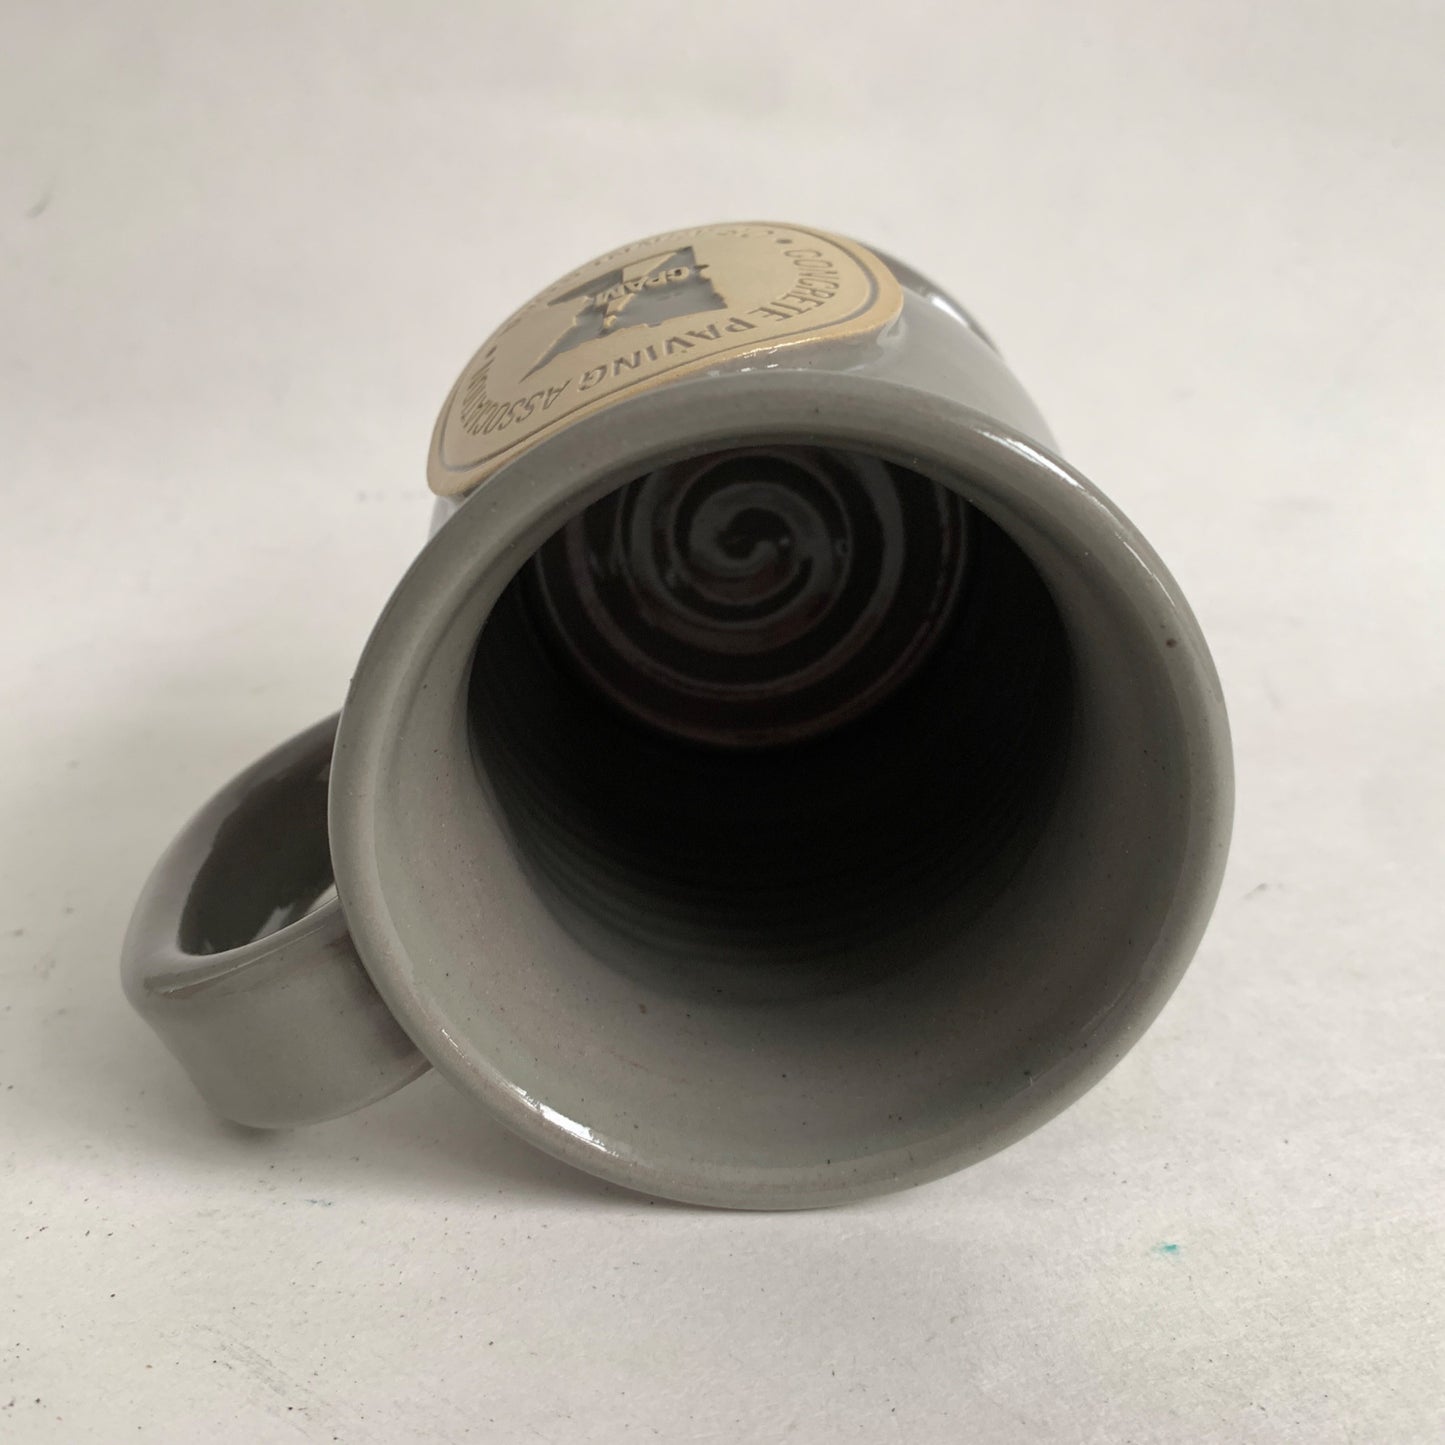 CPAM Concrete Paving of Minnesota Gray Coffee Mug Ceramic Sunset Hill Stoneware